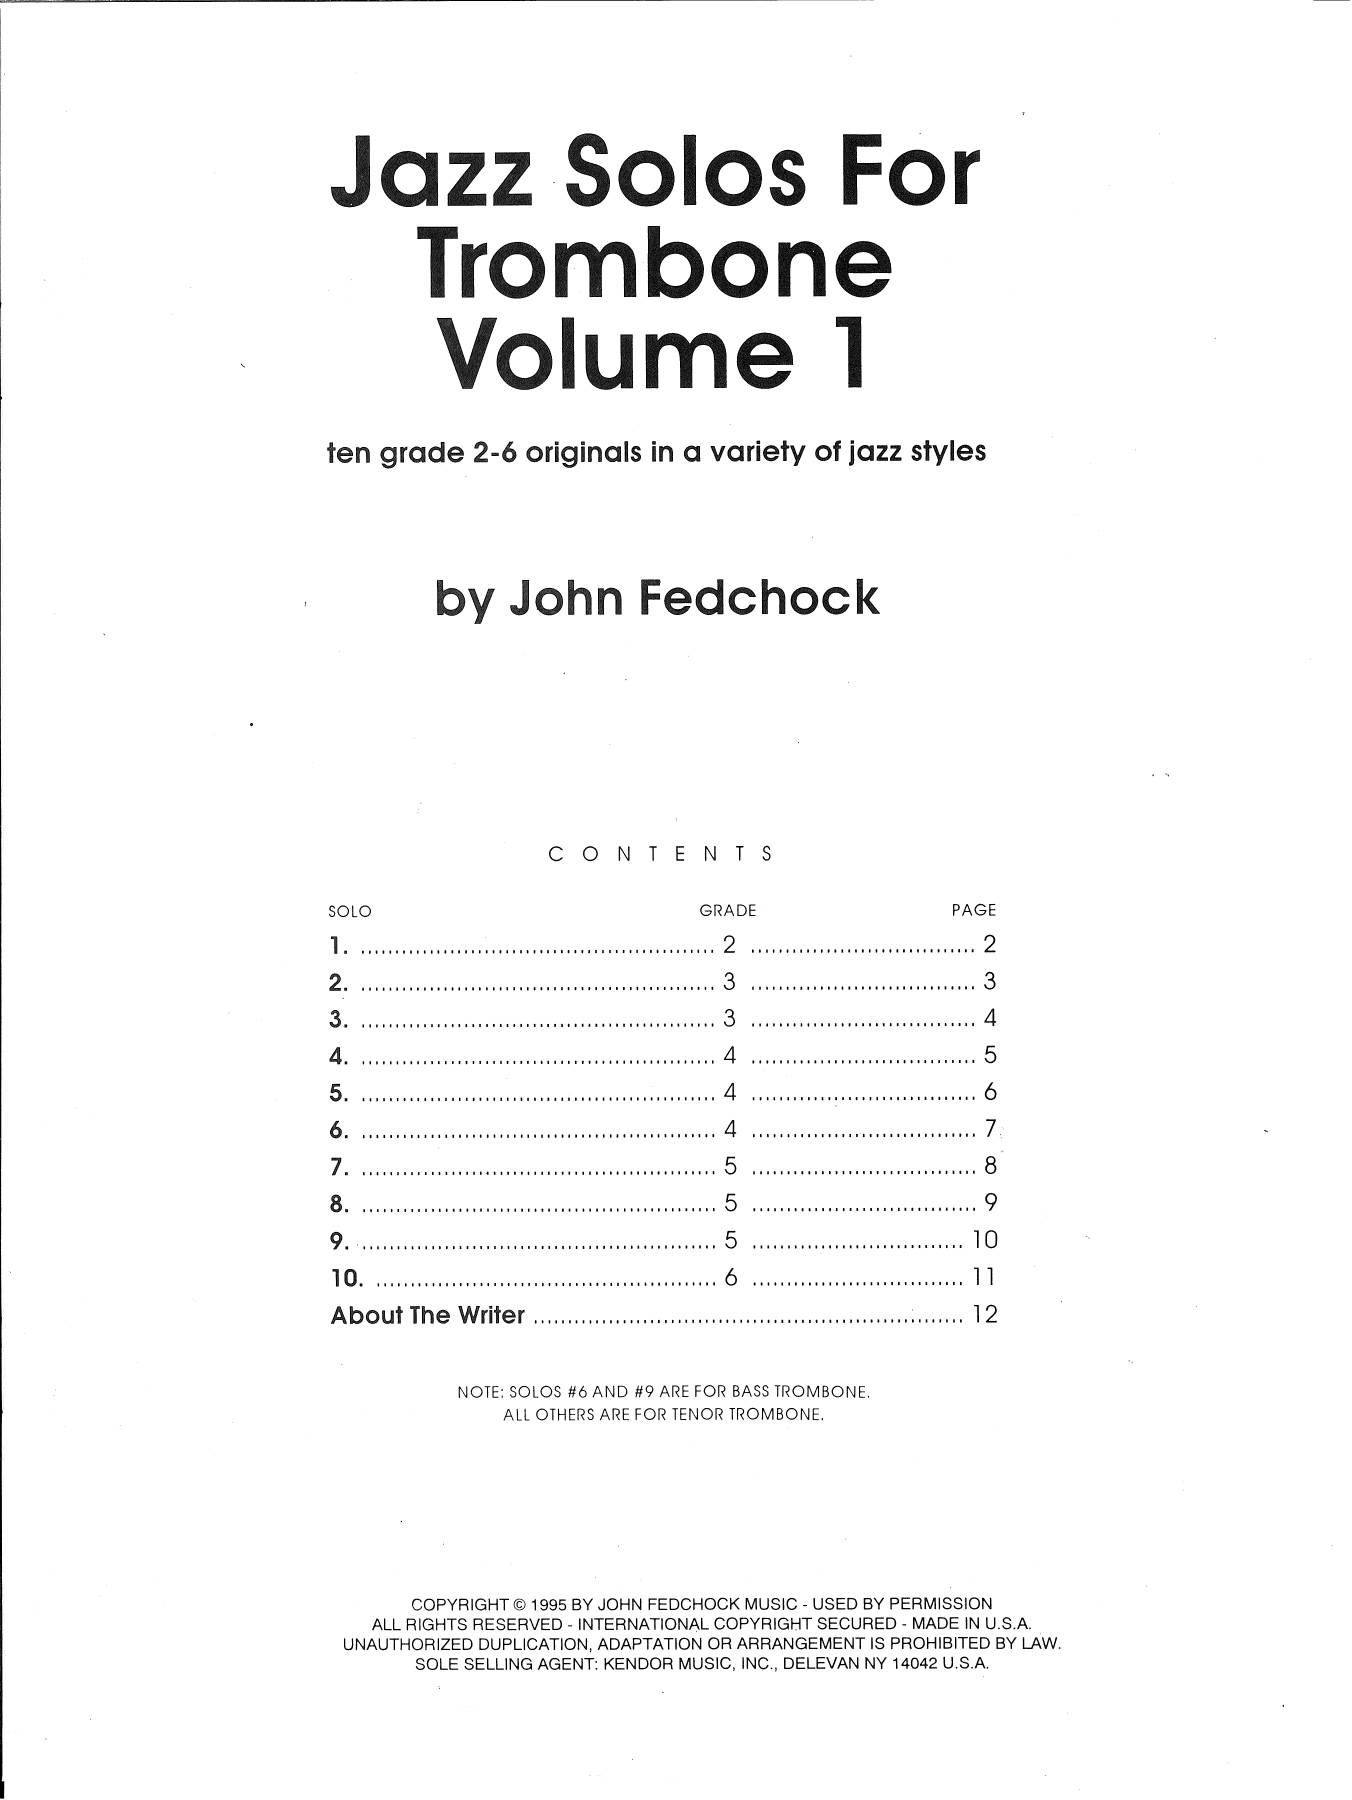 Download John Fedchock Jazz Solos For Trombone, Volume 1 Sheet Music